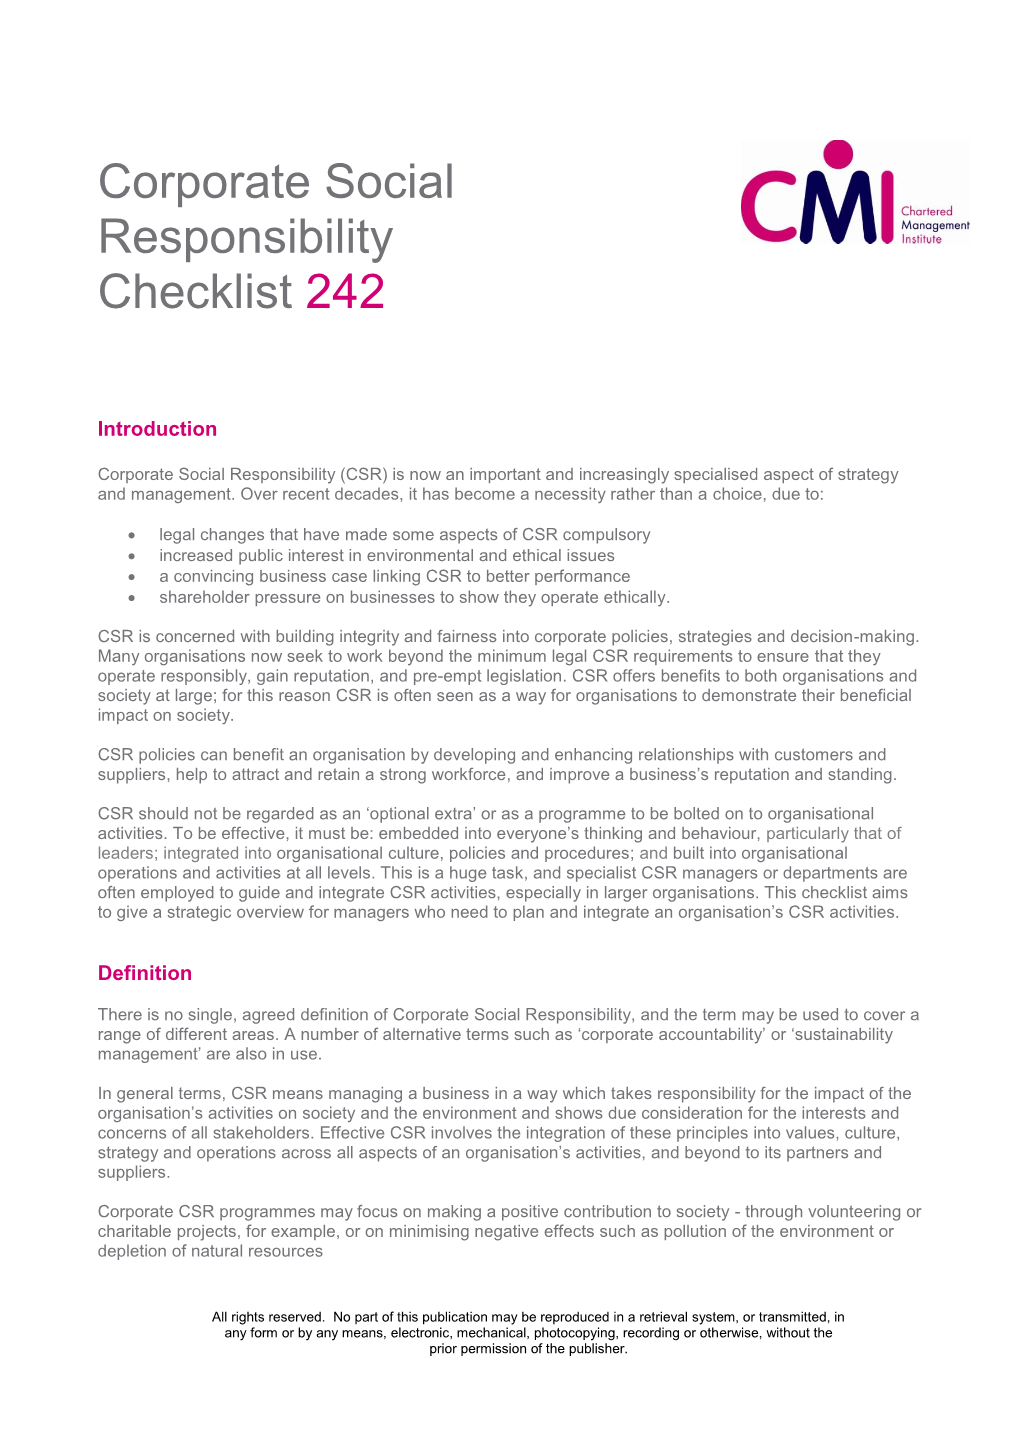 Corporate Social Responsibility Checklist 242